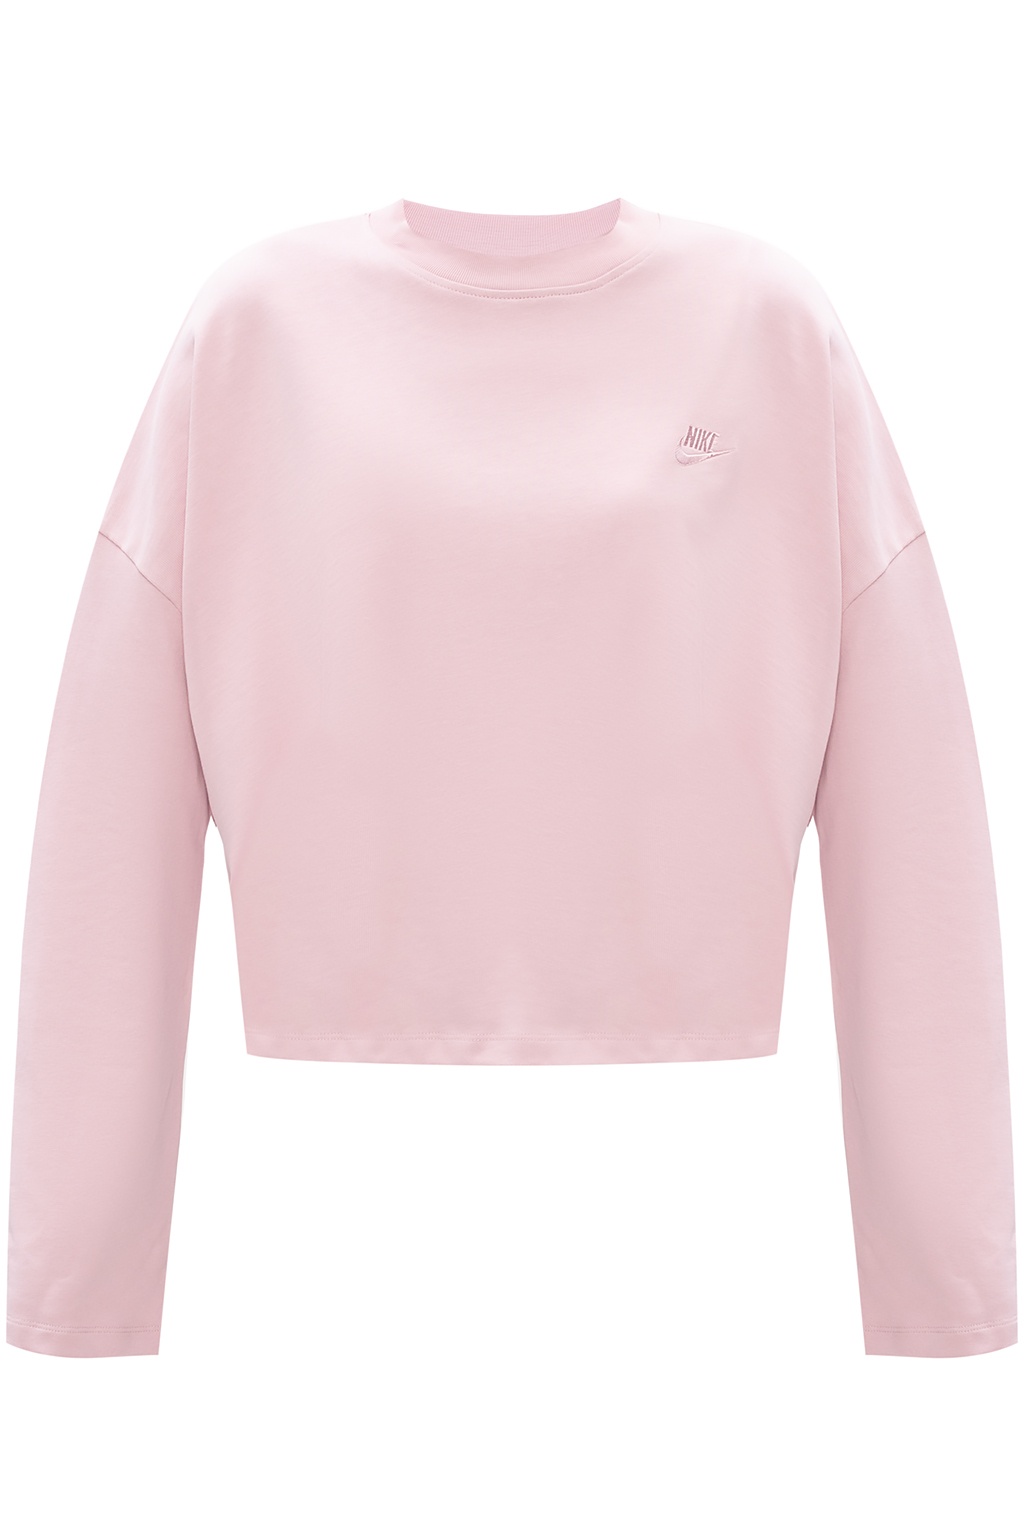 Cropped sweatshirt with logo Nike 